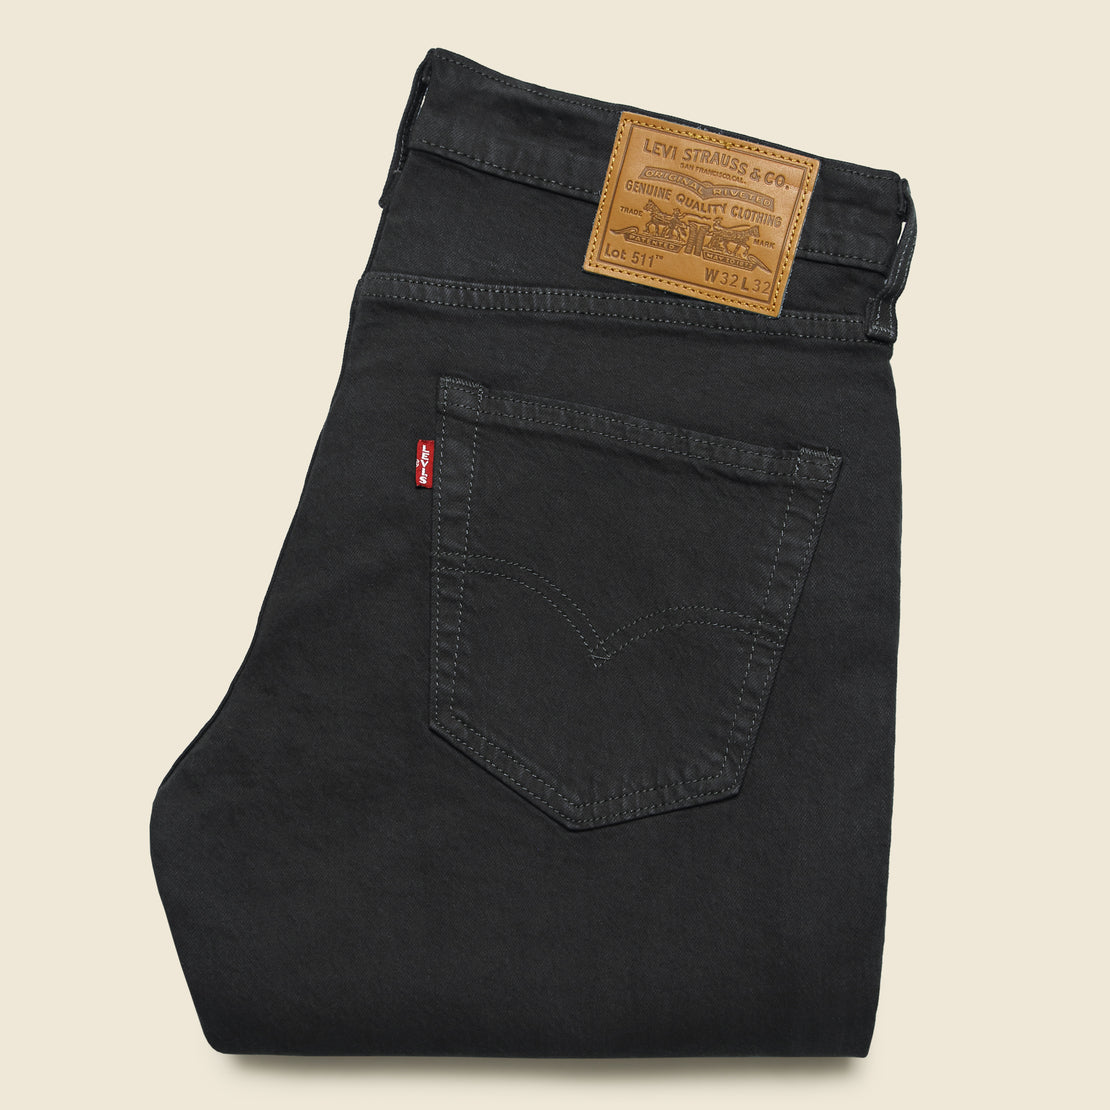 511 Slim Jean - Black Leaf - Levis Premium - STAG Provisions - Pants - Denim